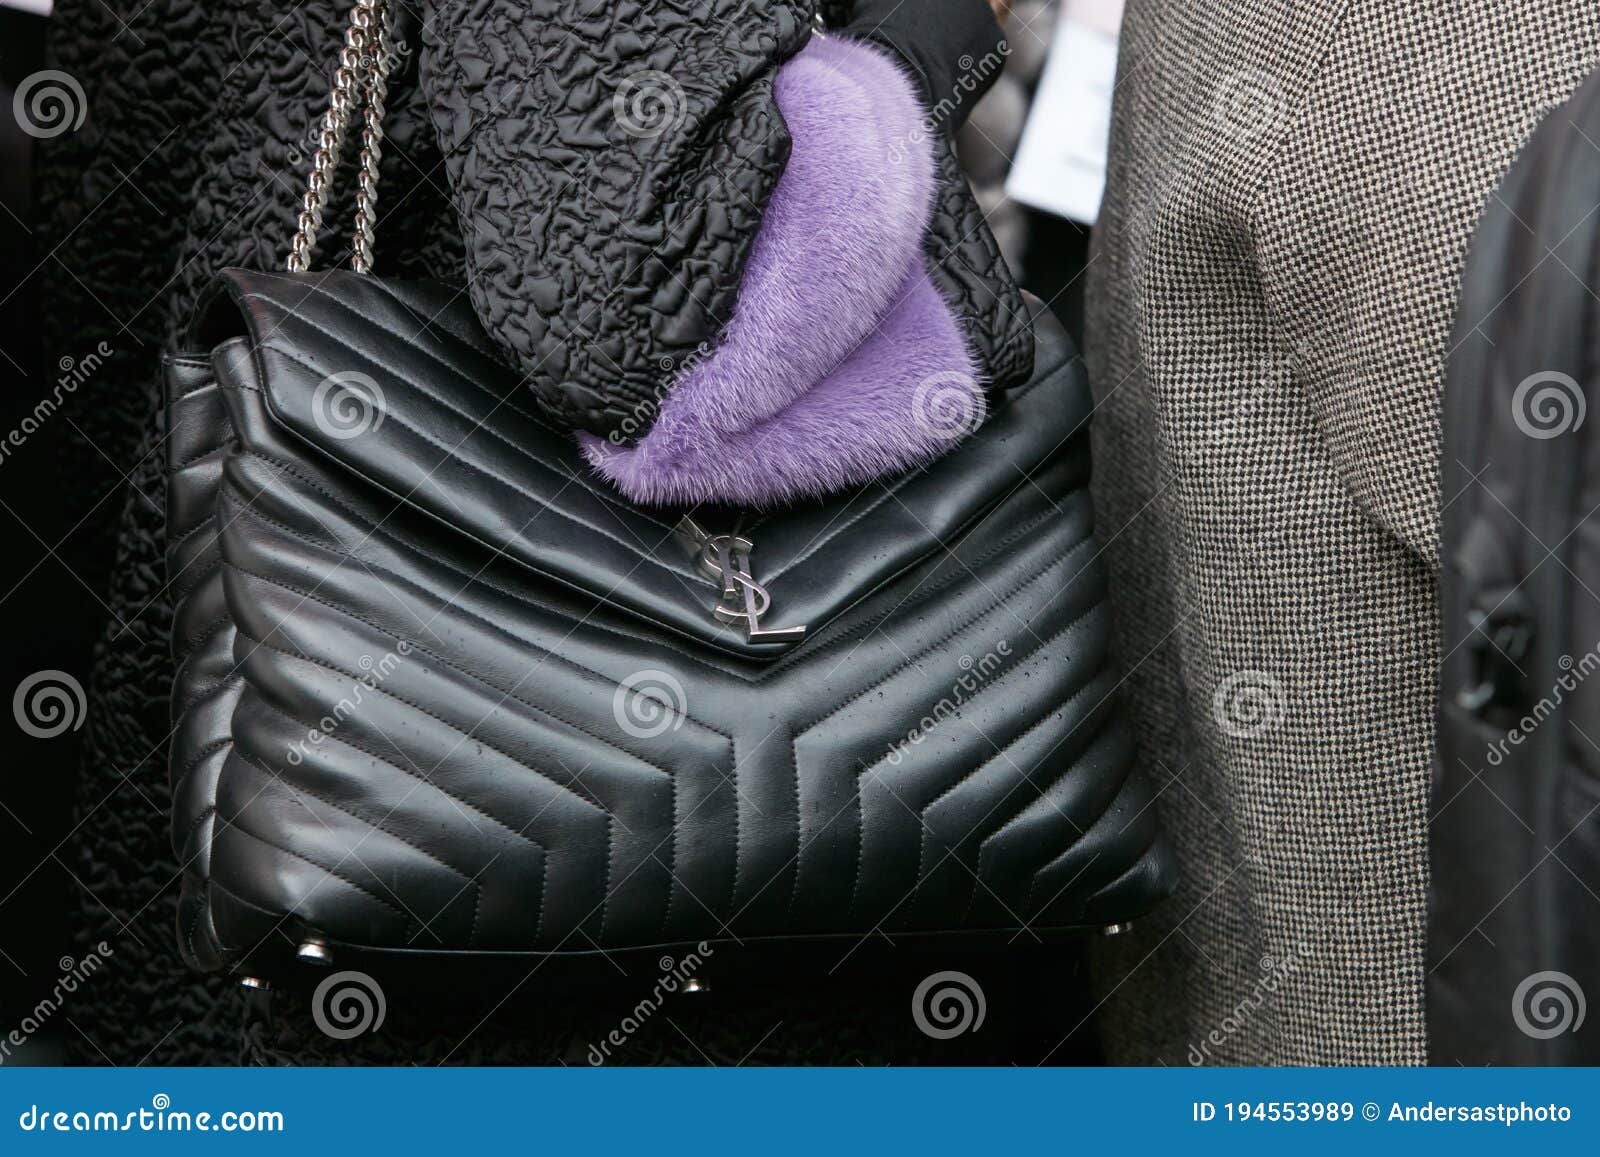 Woman with Black Leather Yves Saint Laurent Bag before Fendi